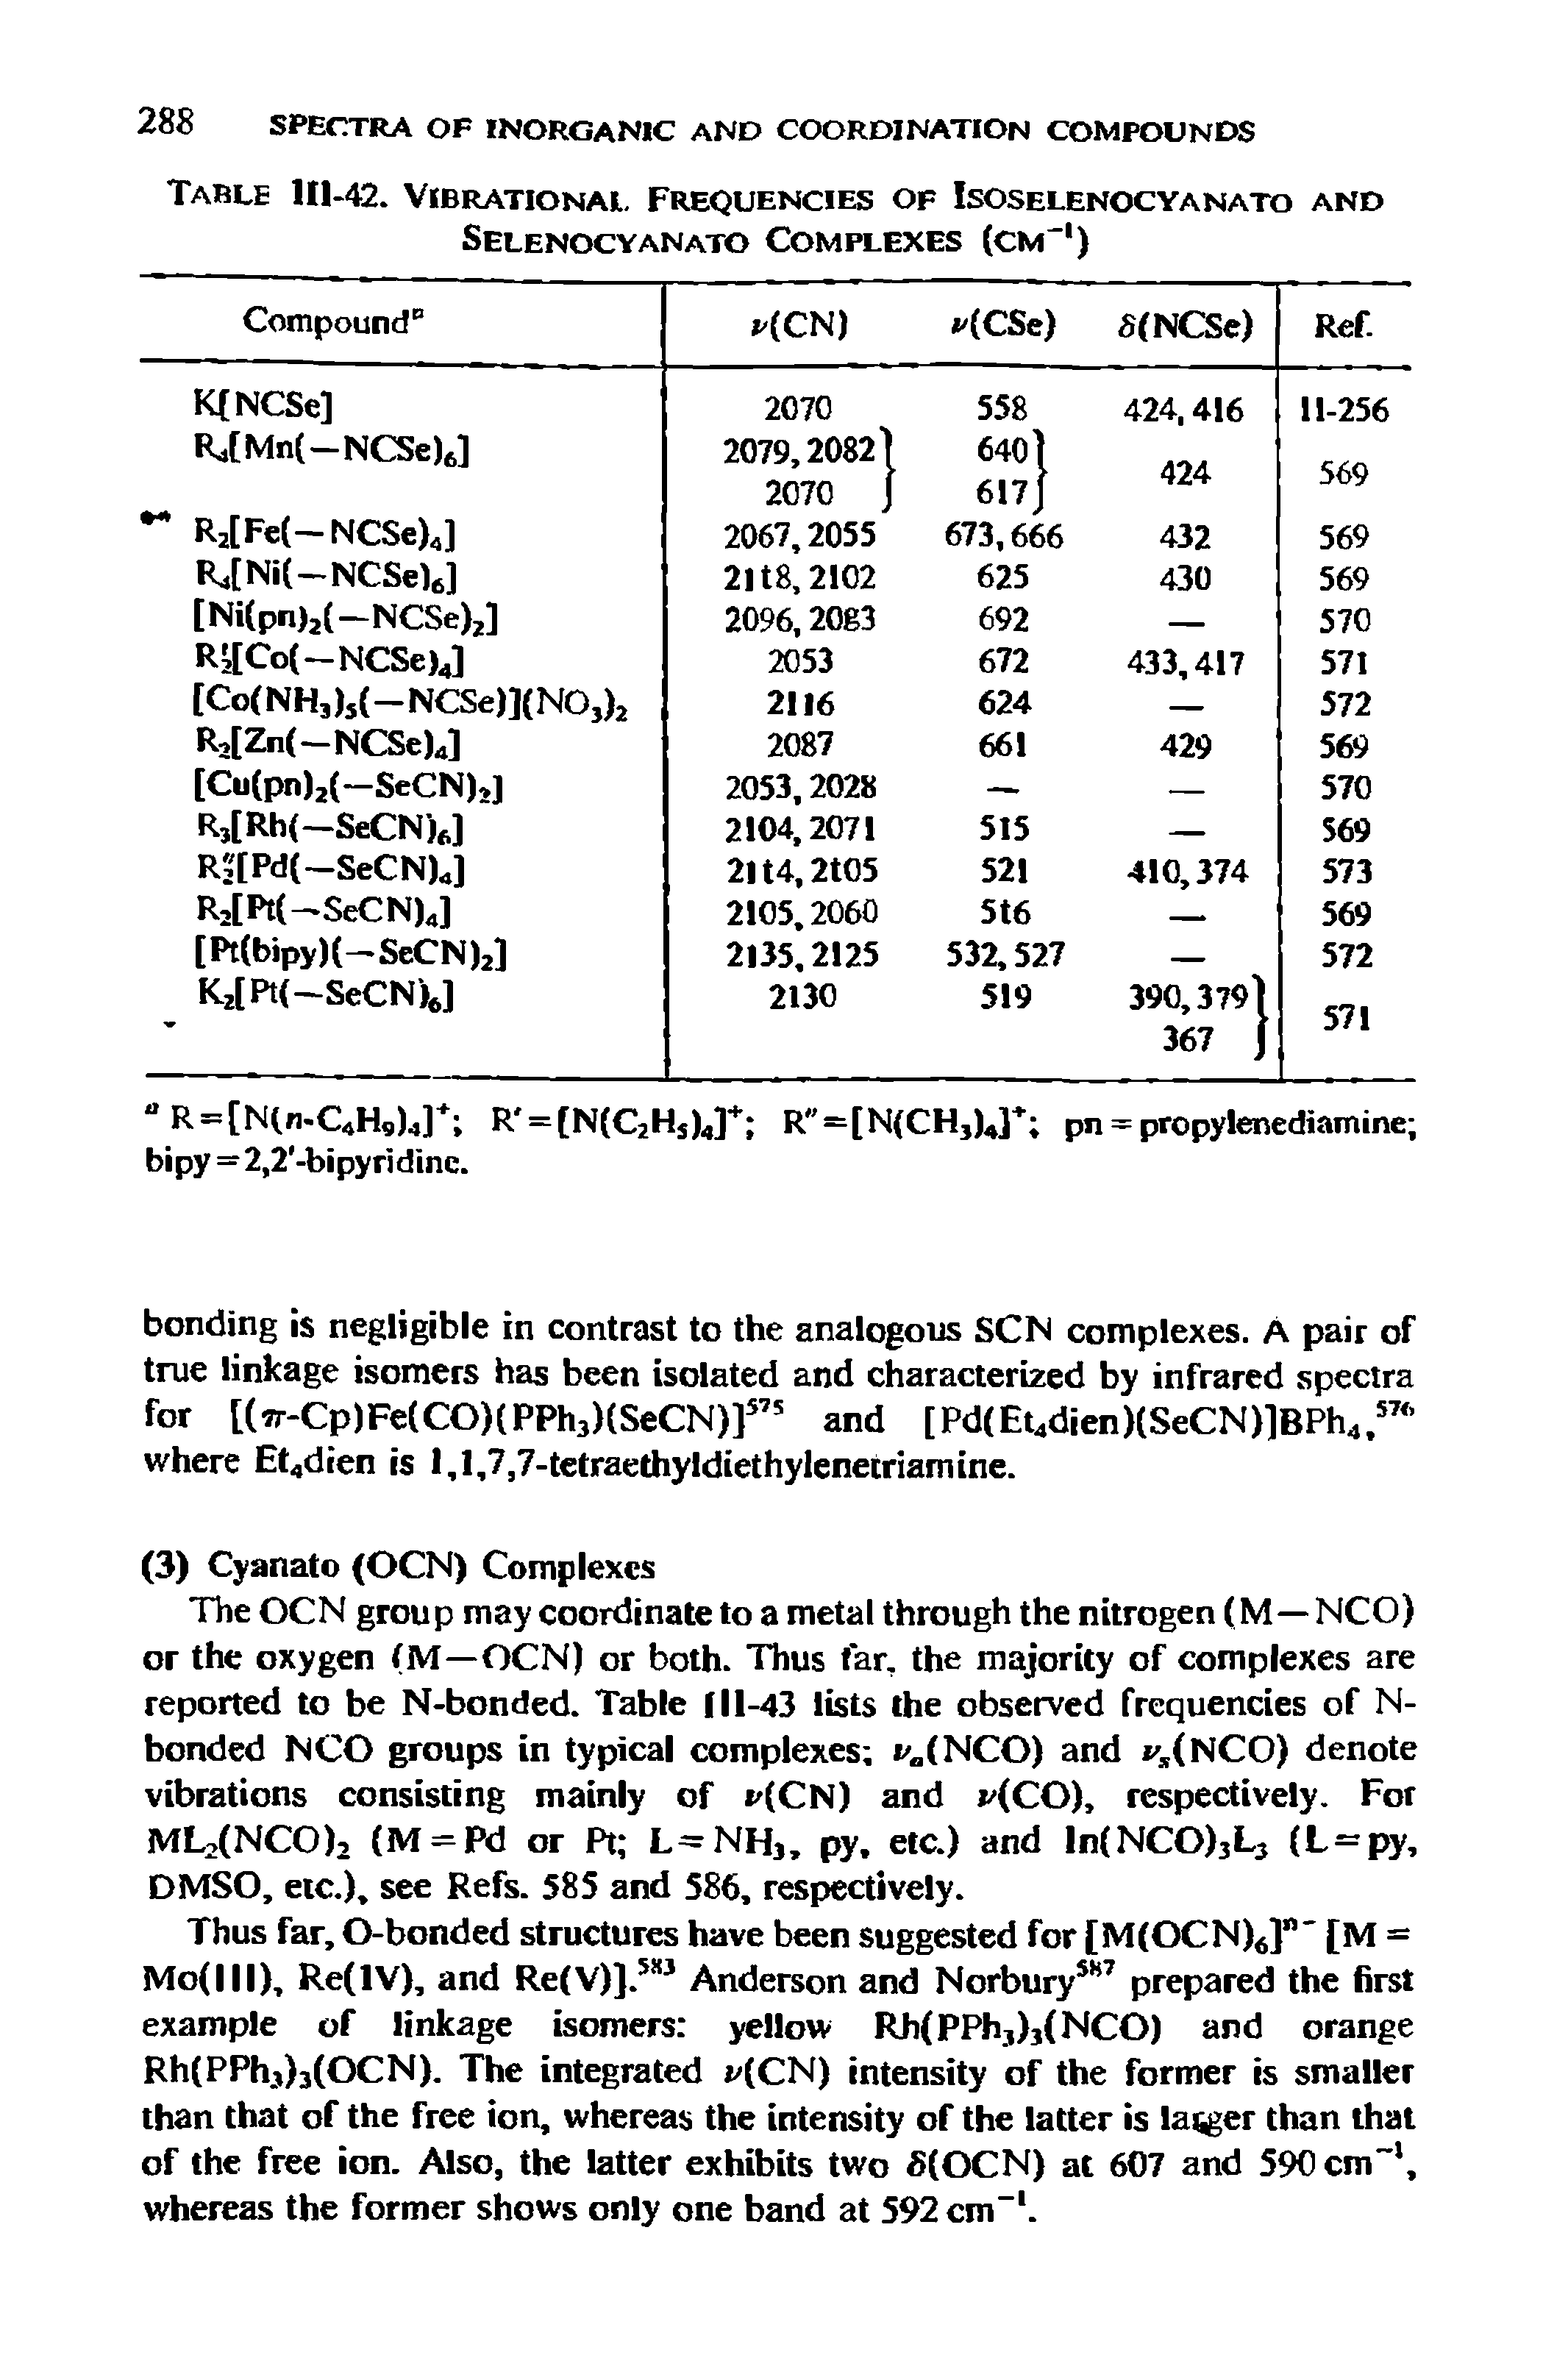 Table 111-42. Vibrationai, Frequencies of Isoselenocyanato and Selenocyanato Complexes (cm" )...